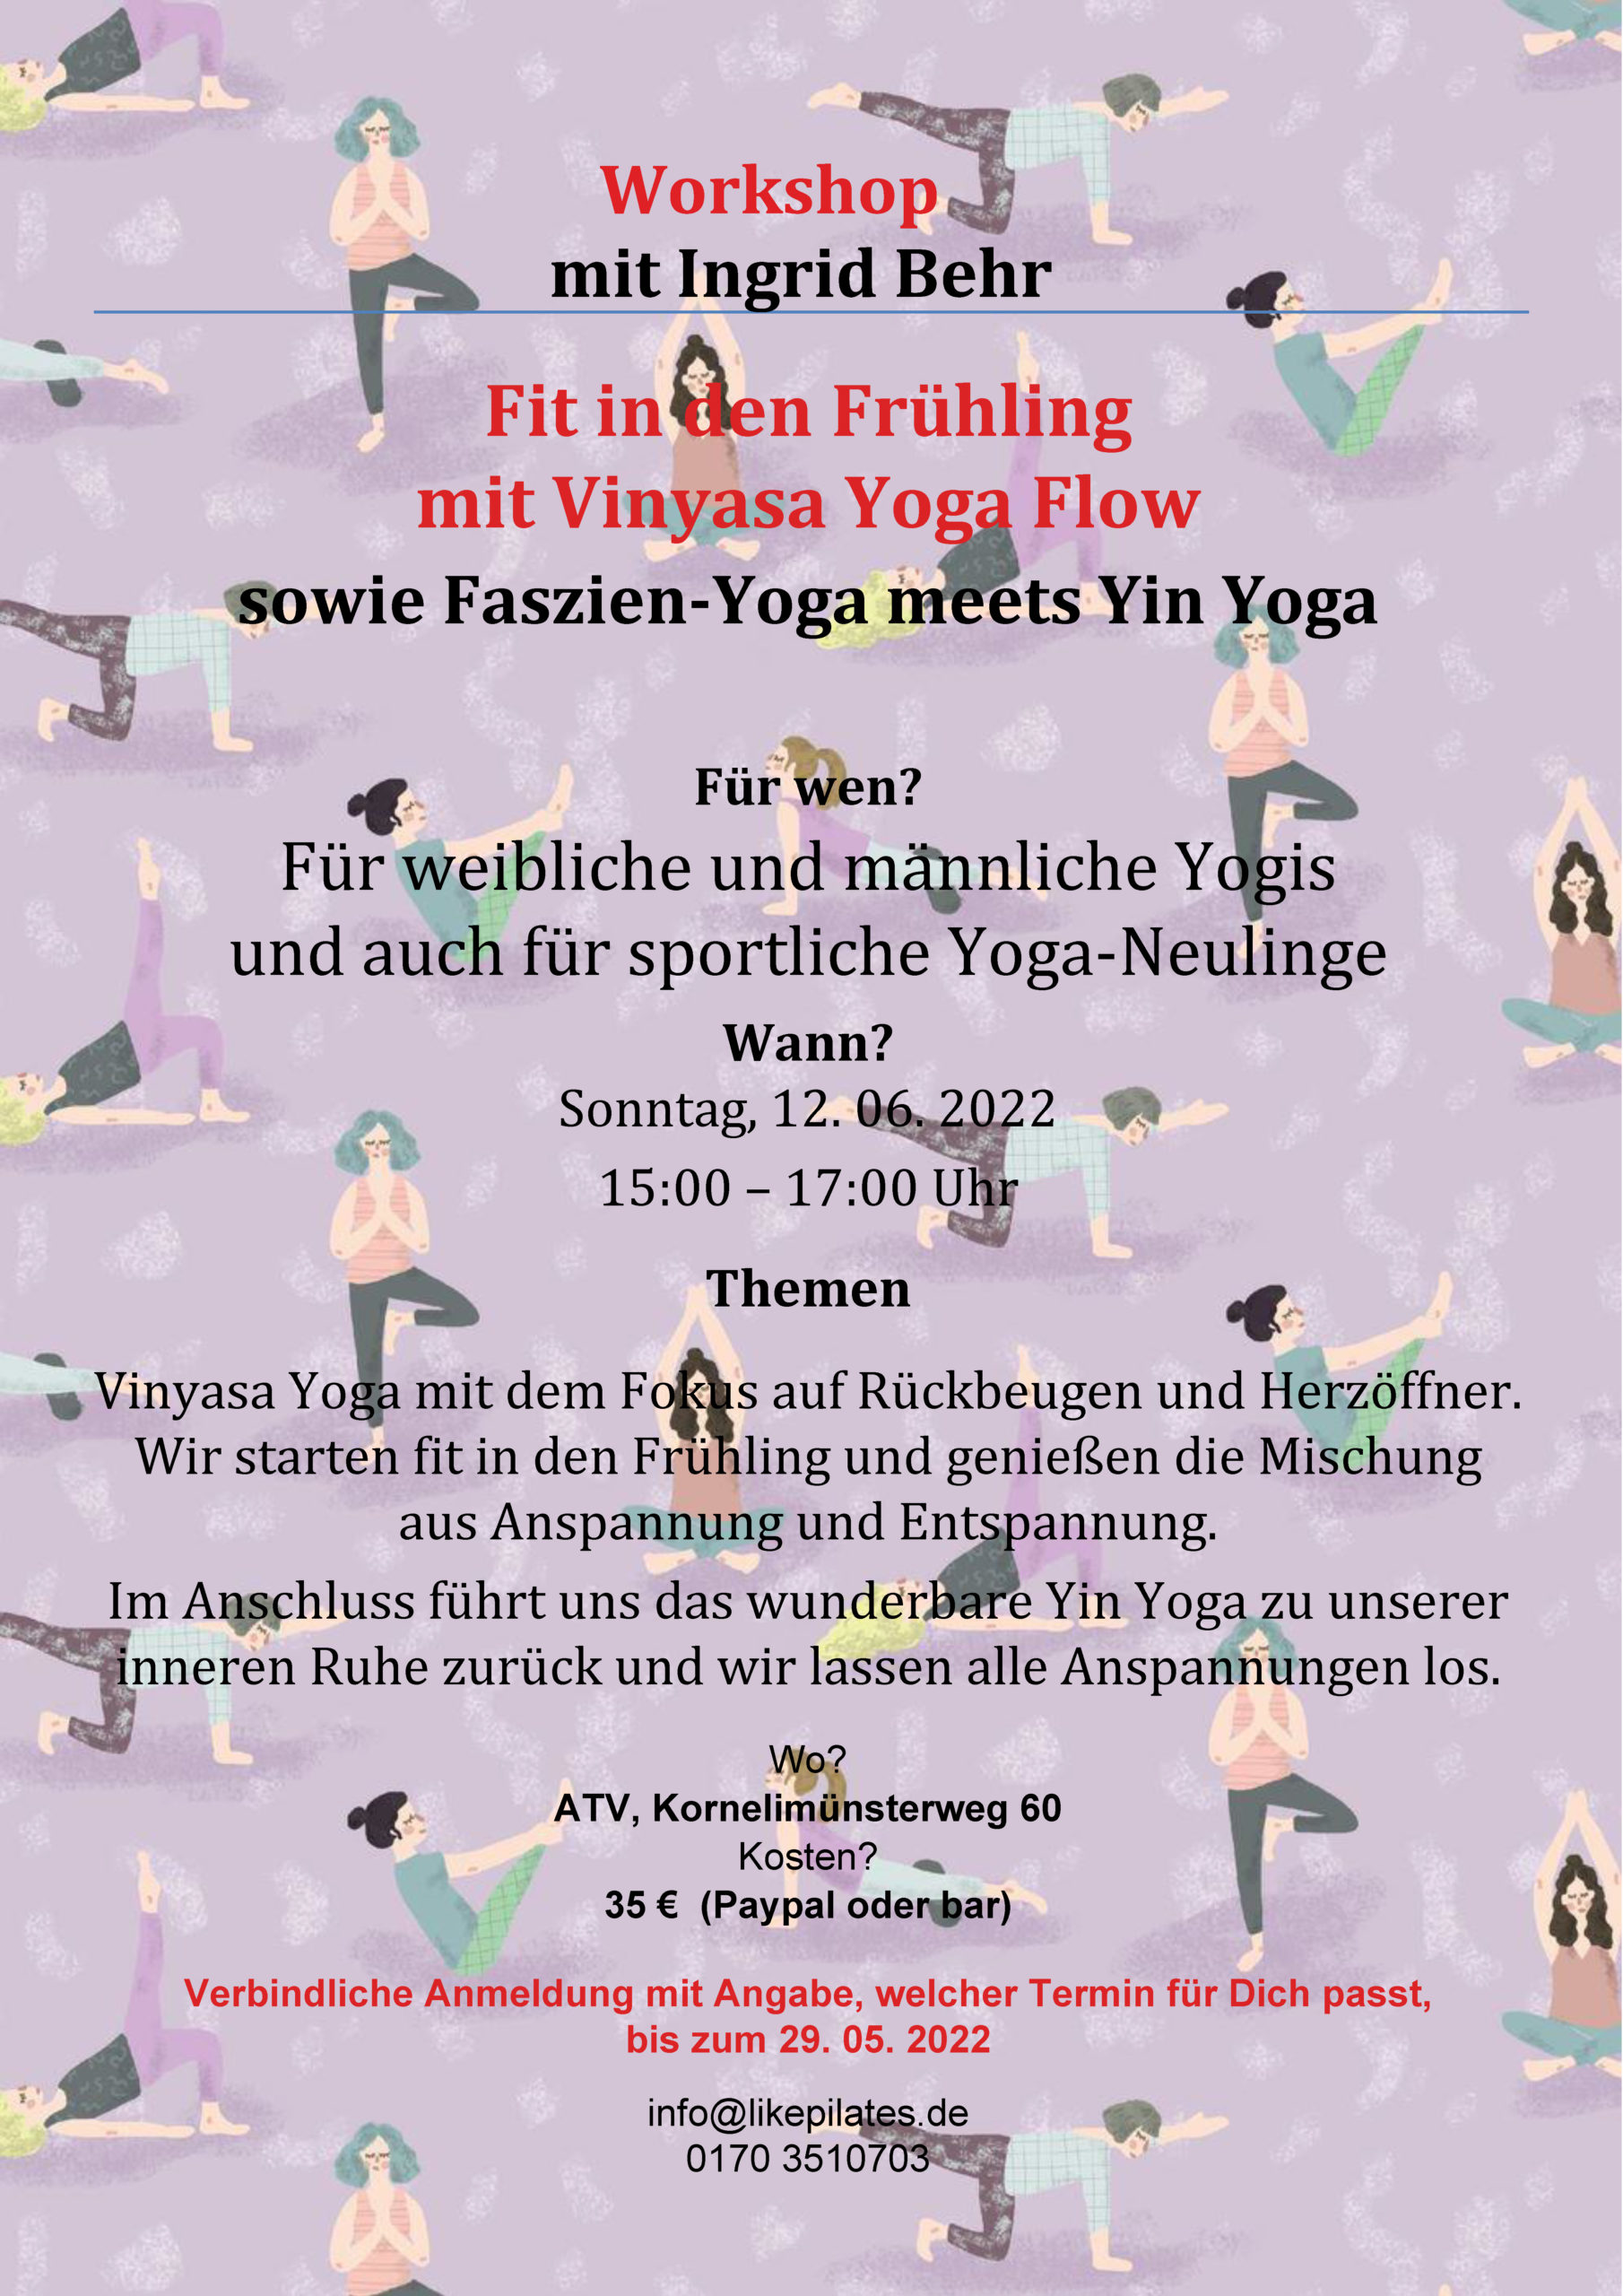 Plakat zum Vinyasa Yoga Workshop